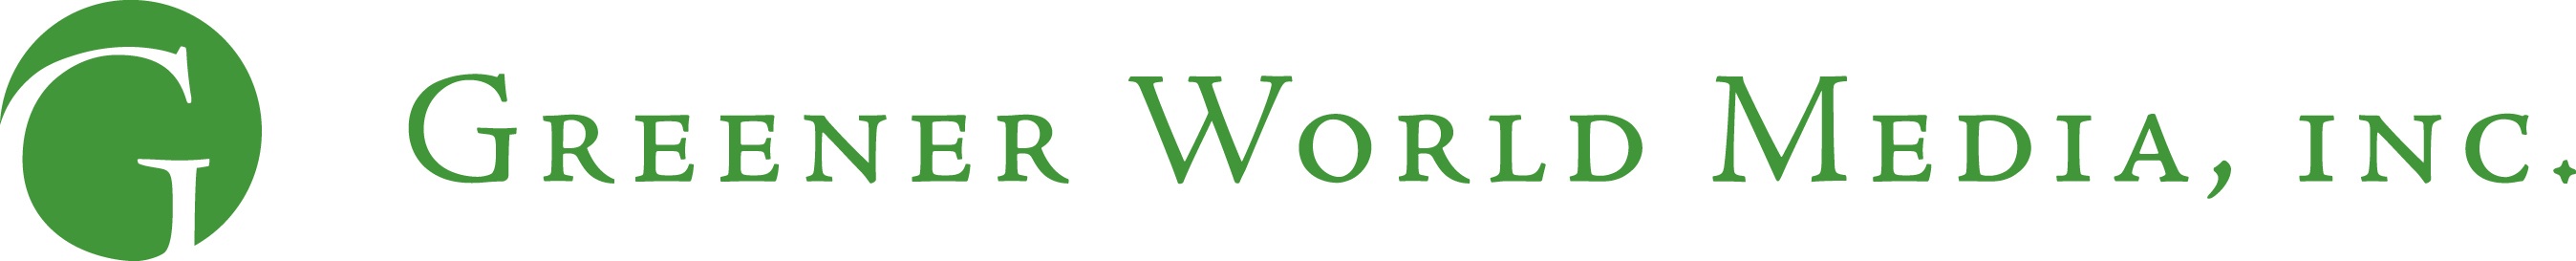 Greener World Media Inc. logo